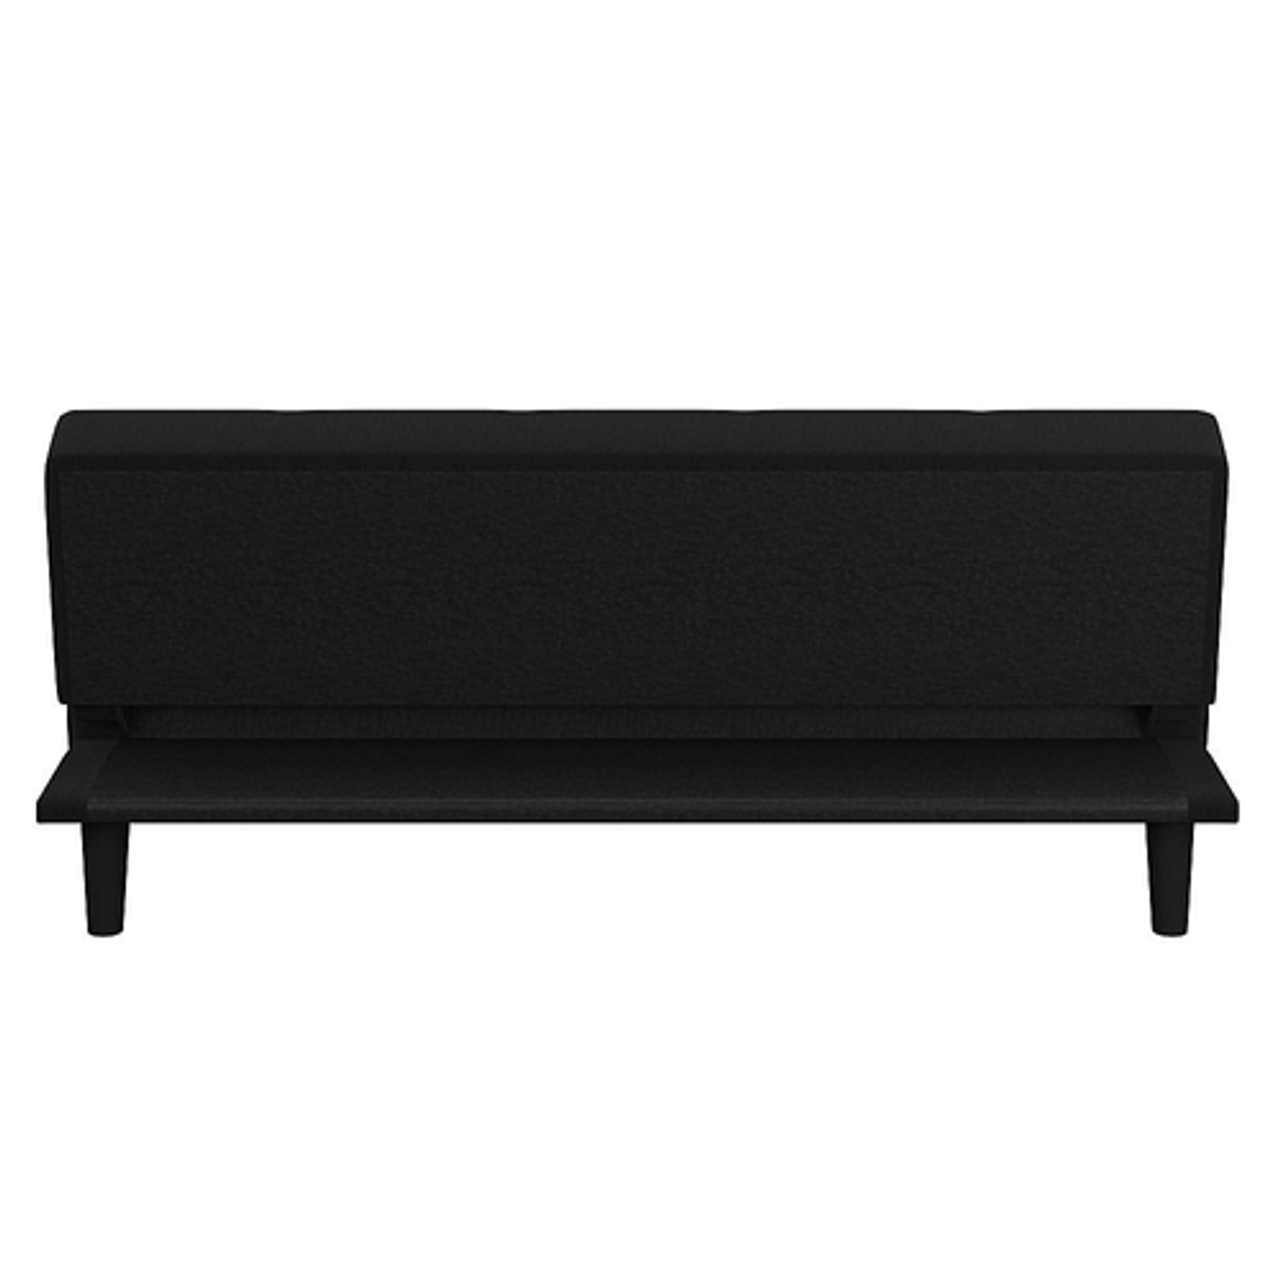 Serta Lori 3-Seat Multi-function Upholstery Fabric Sofa - Black